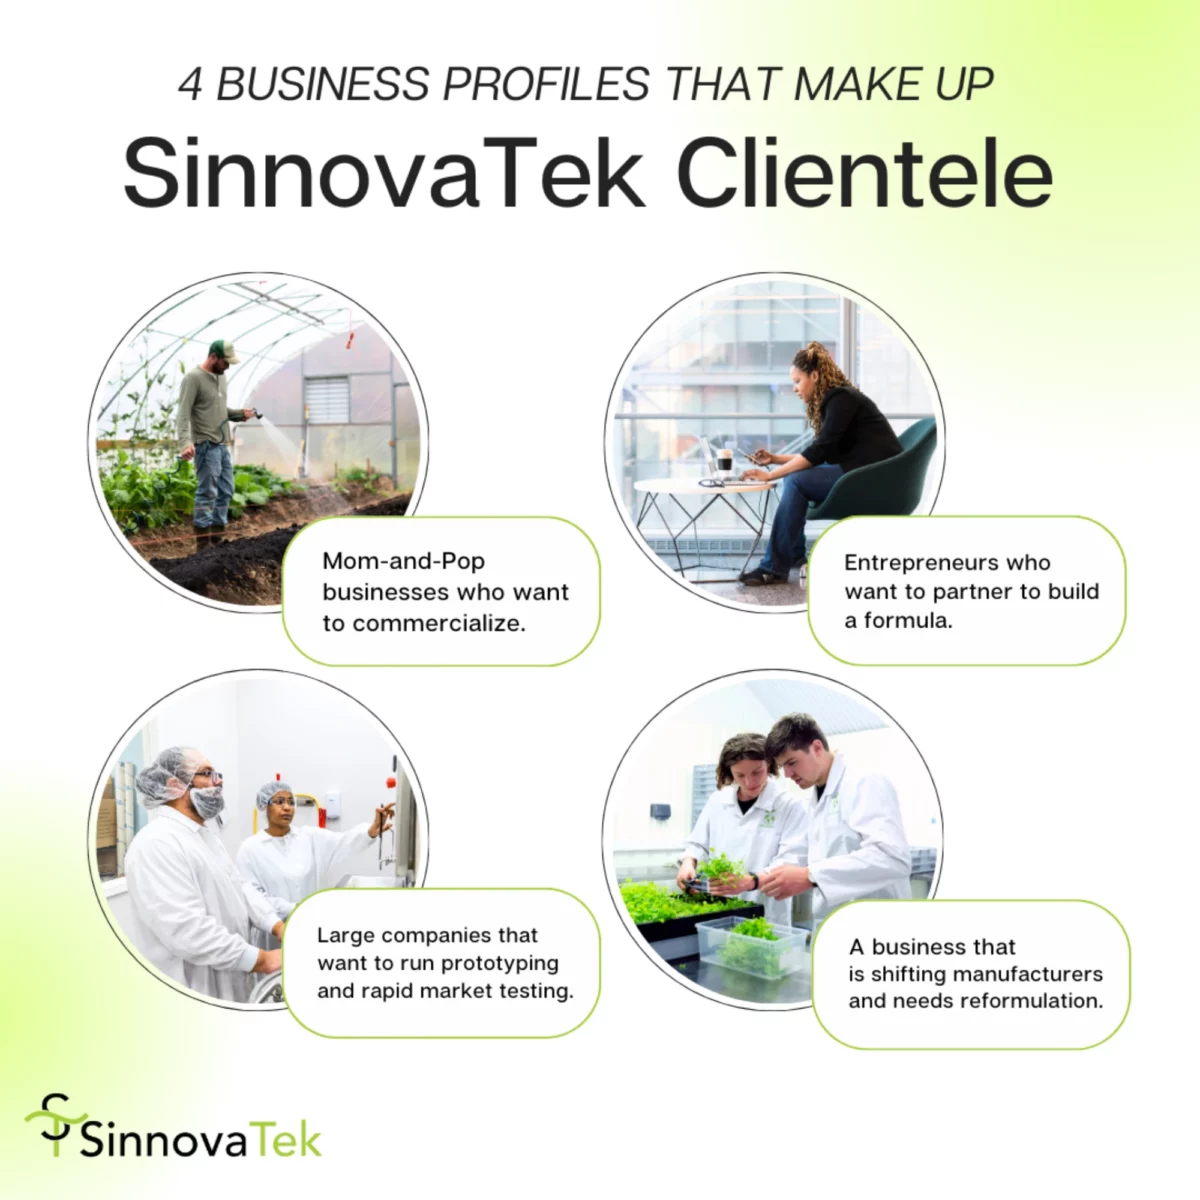 SinnovaTek social post highlighting the four business profiles that make up a SinnovaTek clientele